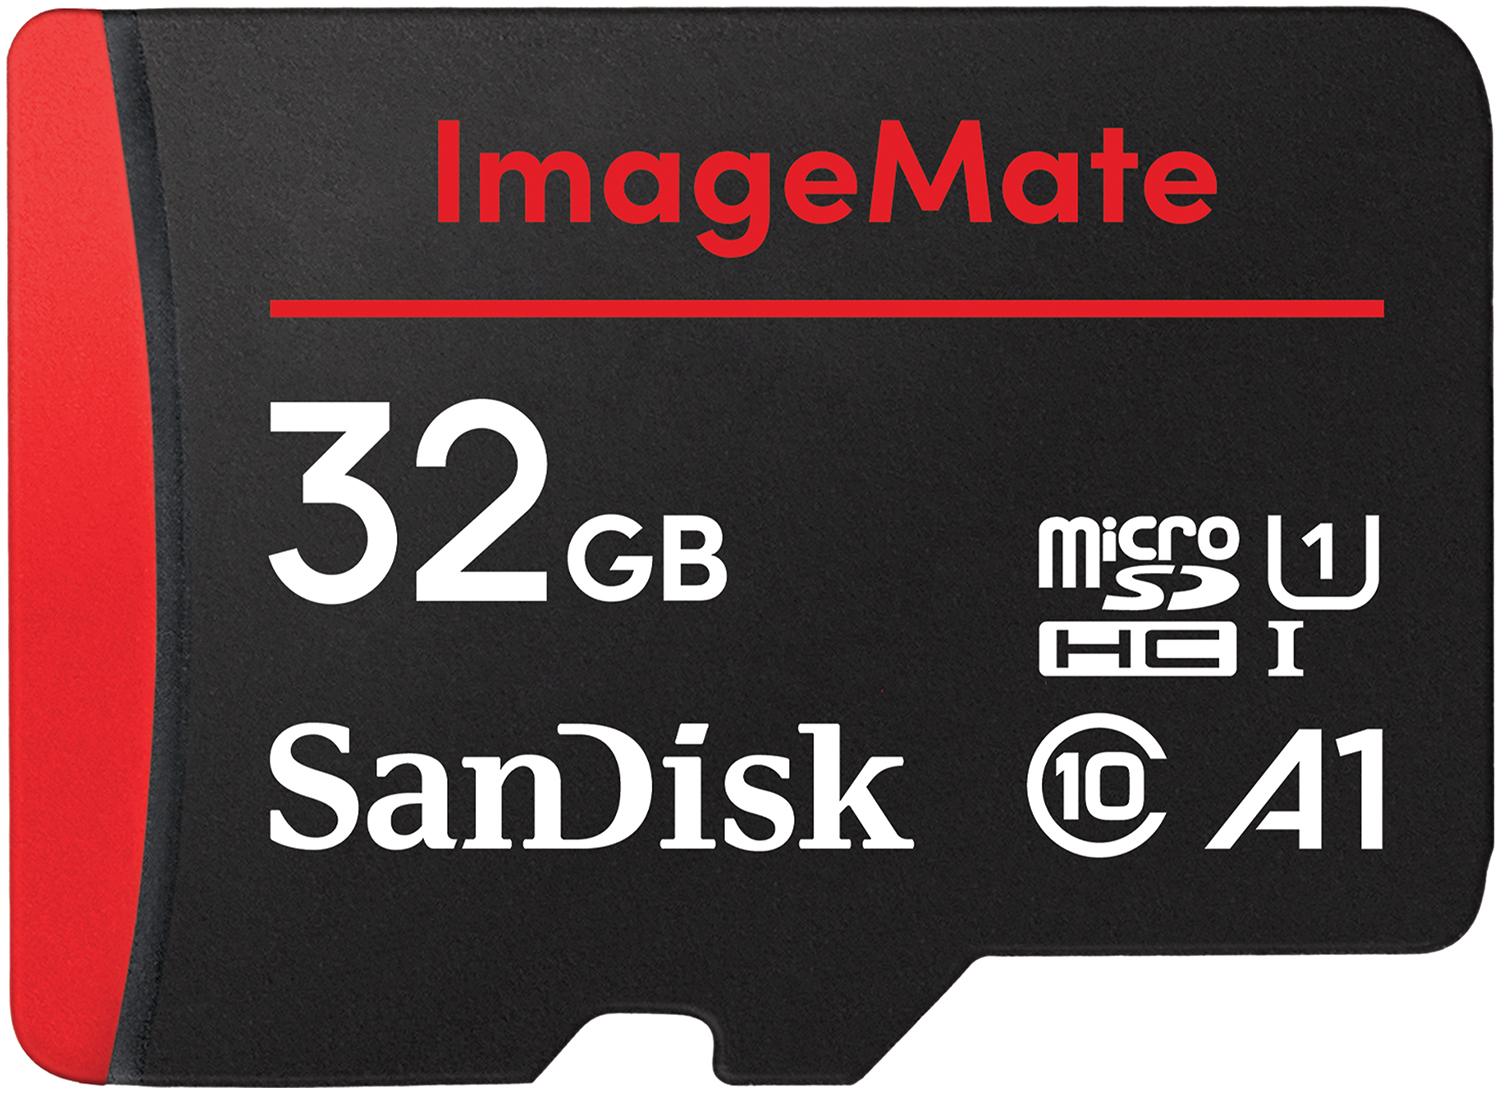 SanDisk 32GB ImageMate microSDHC UHS-1 Memory Card - Up to 120MB/s - SDSQUA4-032G-Aw6ka - image 1 of 11